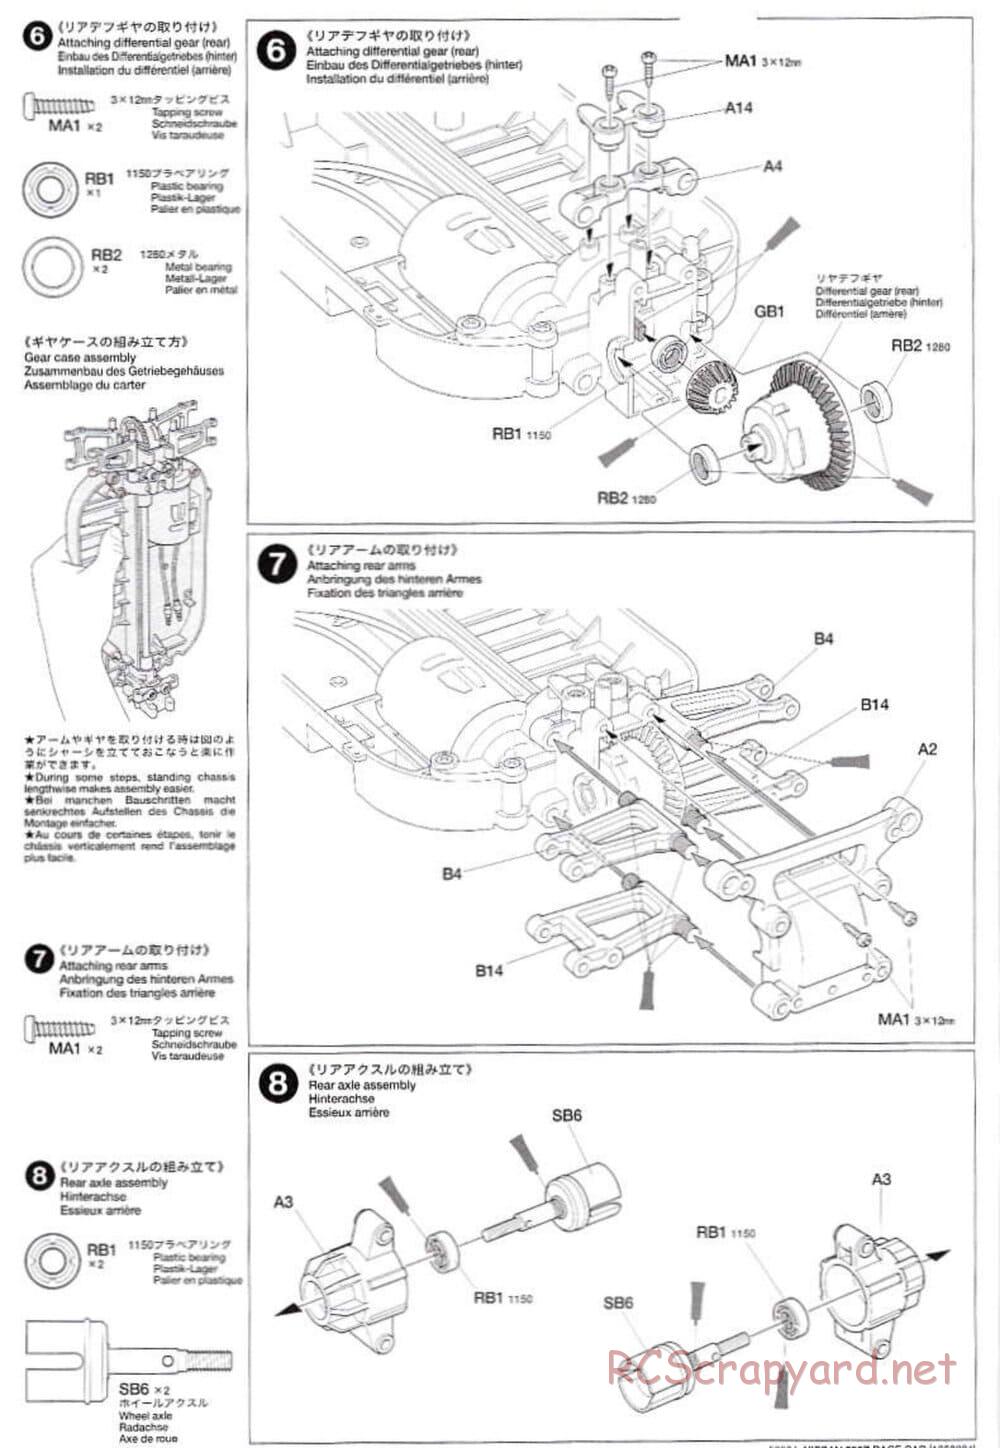 Tamiya - Nissan 350Z Race-Car - TT-01 Chassis - Manual - Page 6